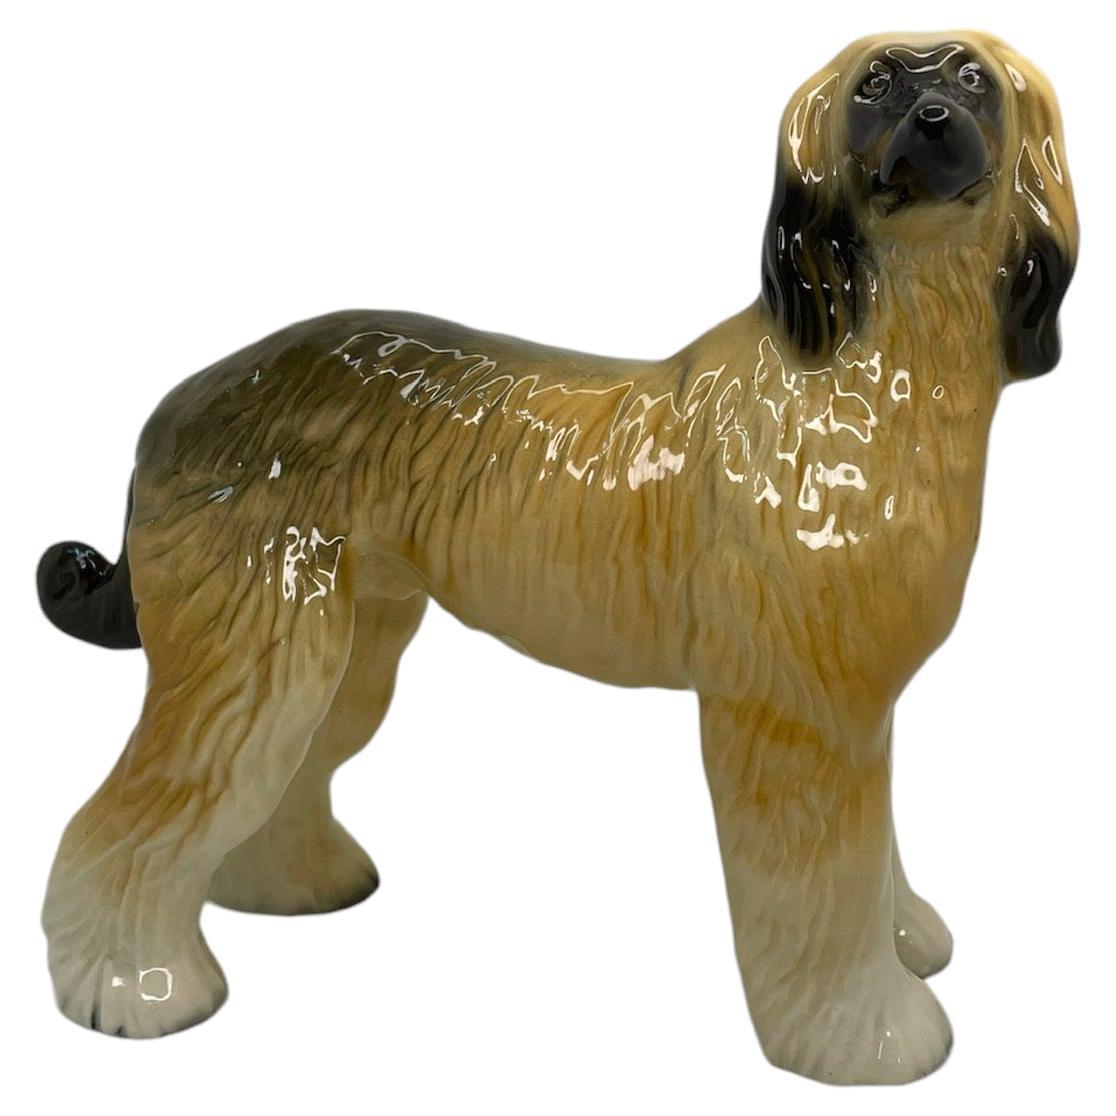 Ceramic Figurine Of An Afghan Hound Dog For Sale